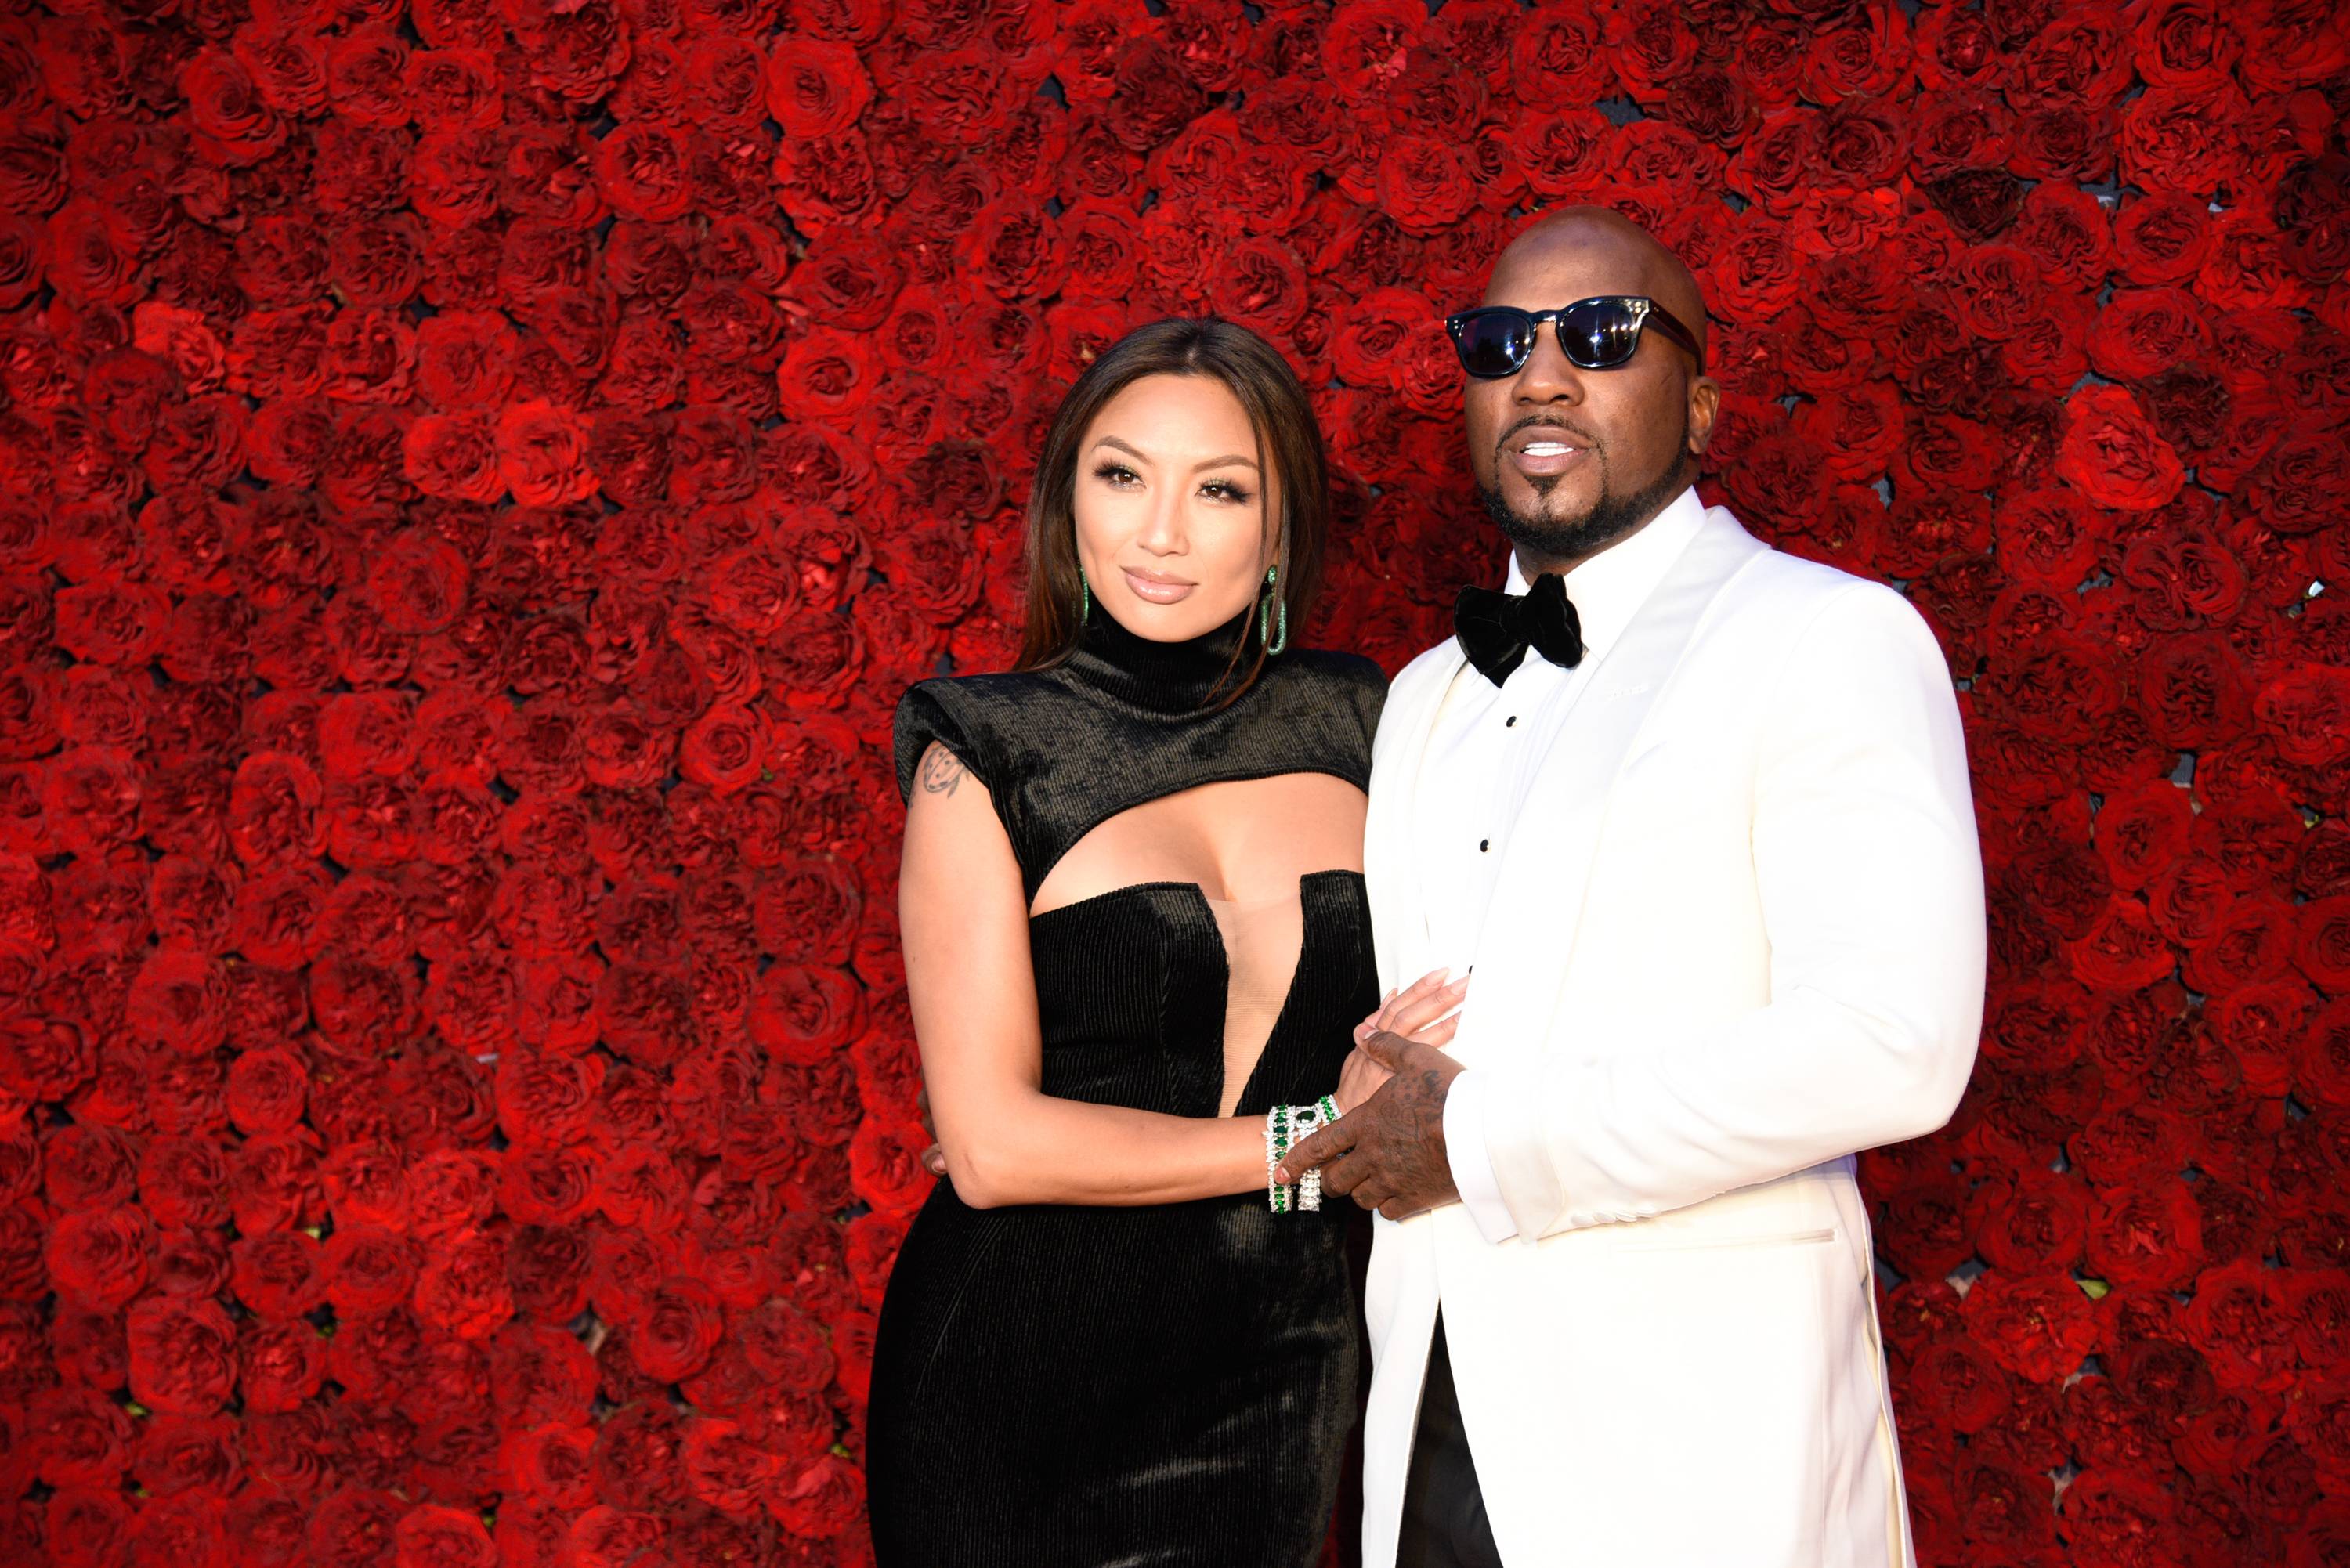 Snoop Dogg Gifts Kim Kardashian With Sweet Treat For Her Birthday, News